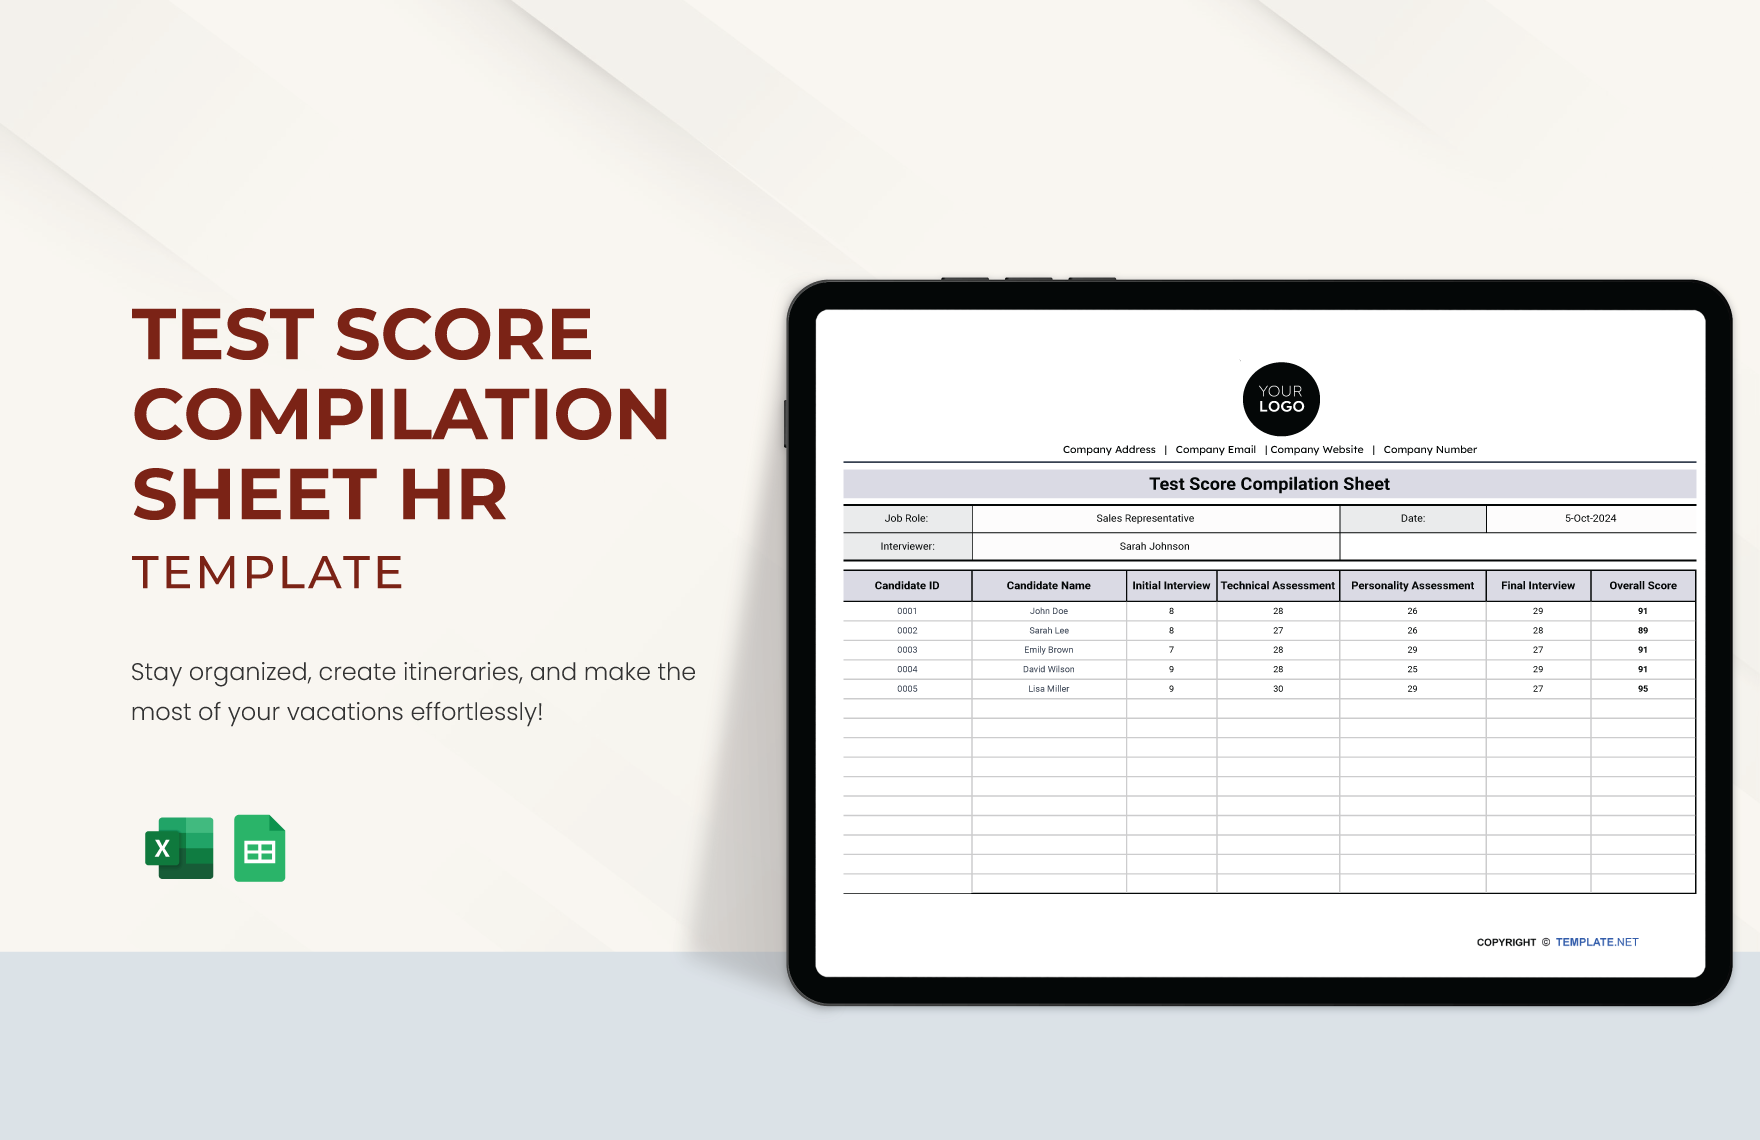 Test Score Compilation Sheet HR Template